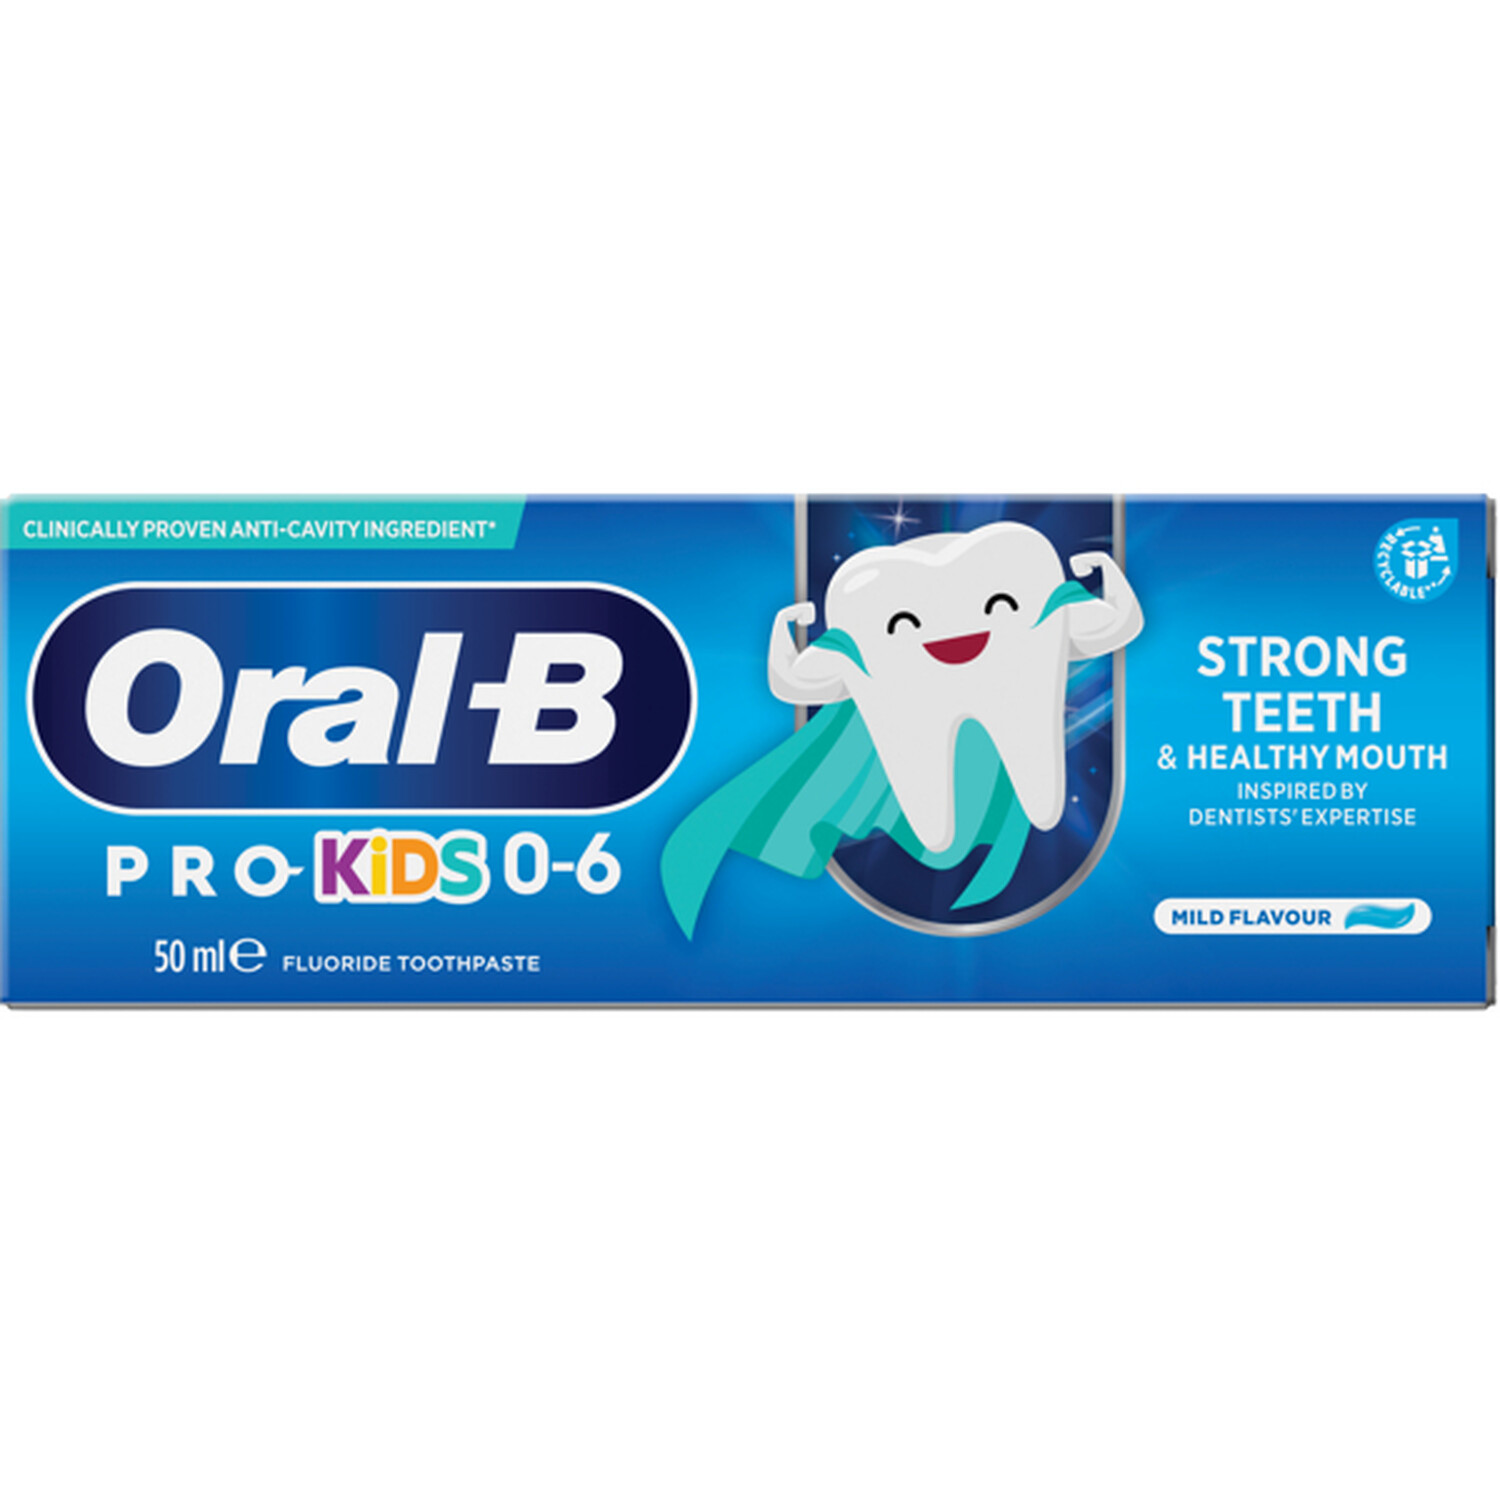 Oral-B Pro Kids 0-6 Toothpaste - Blue Image